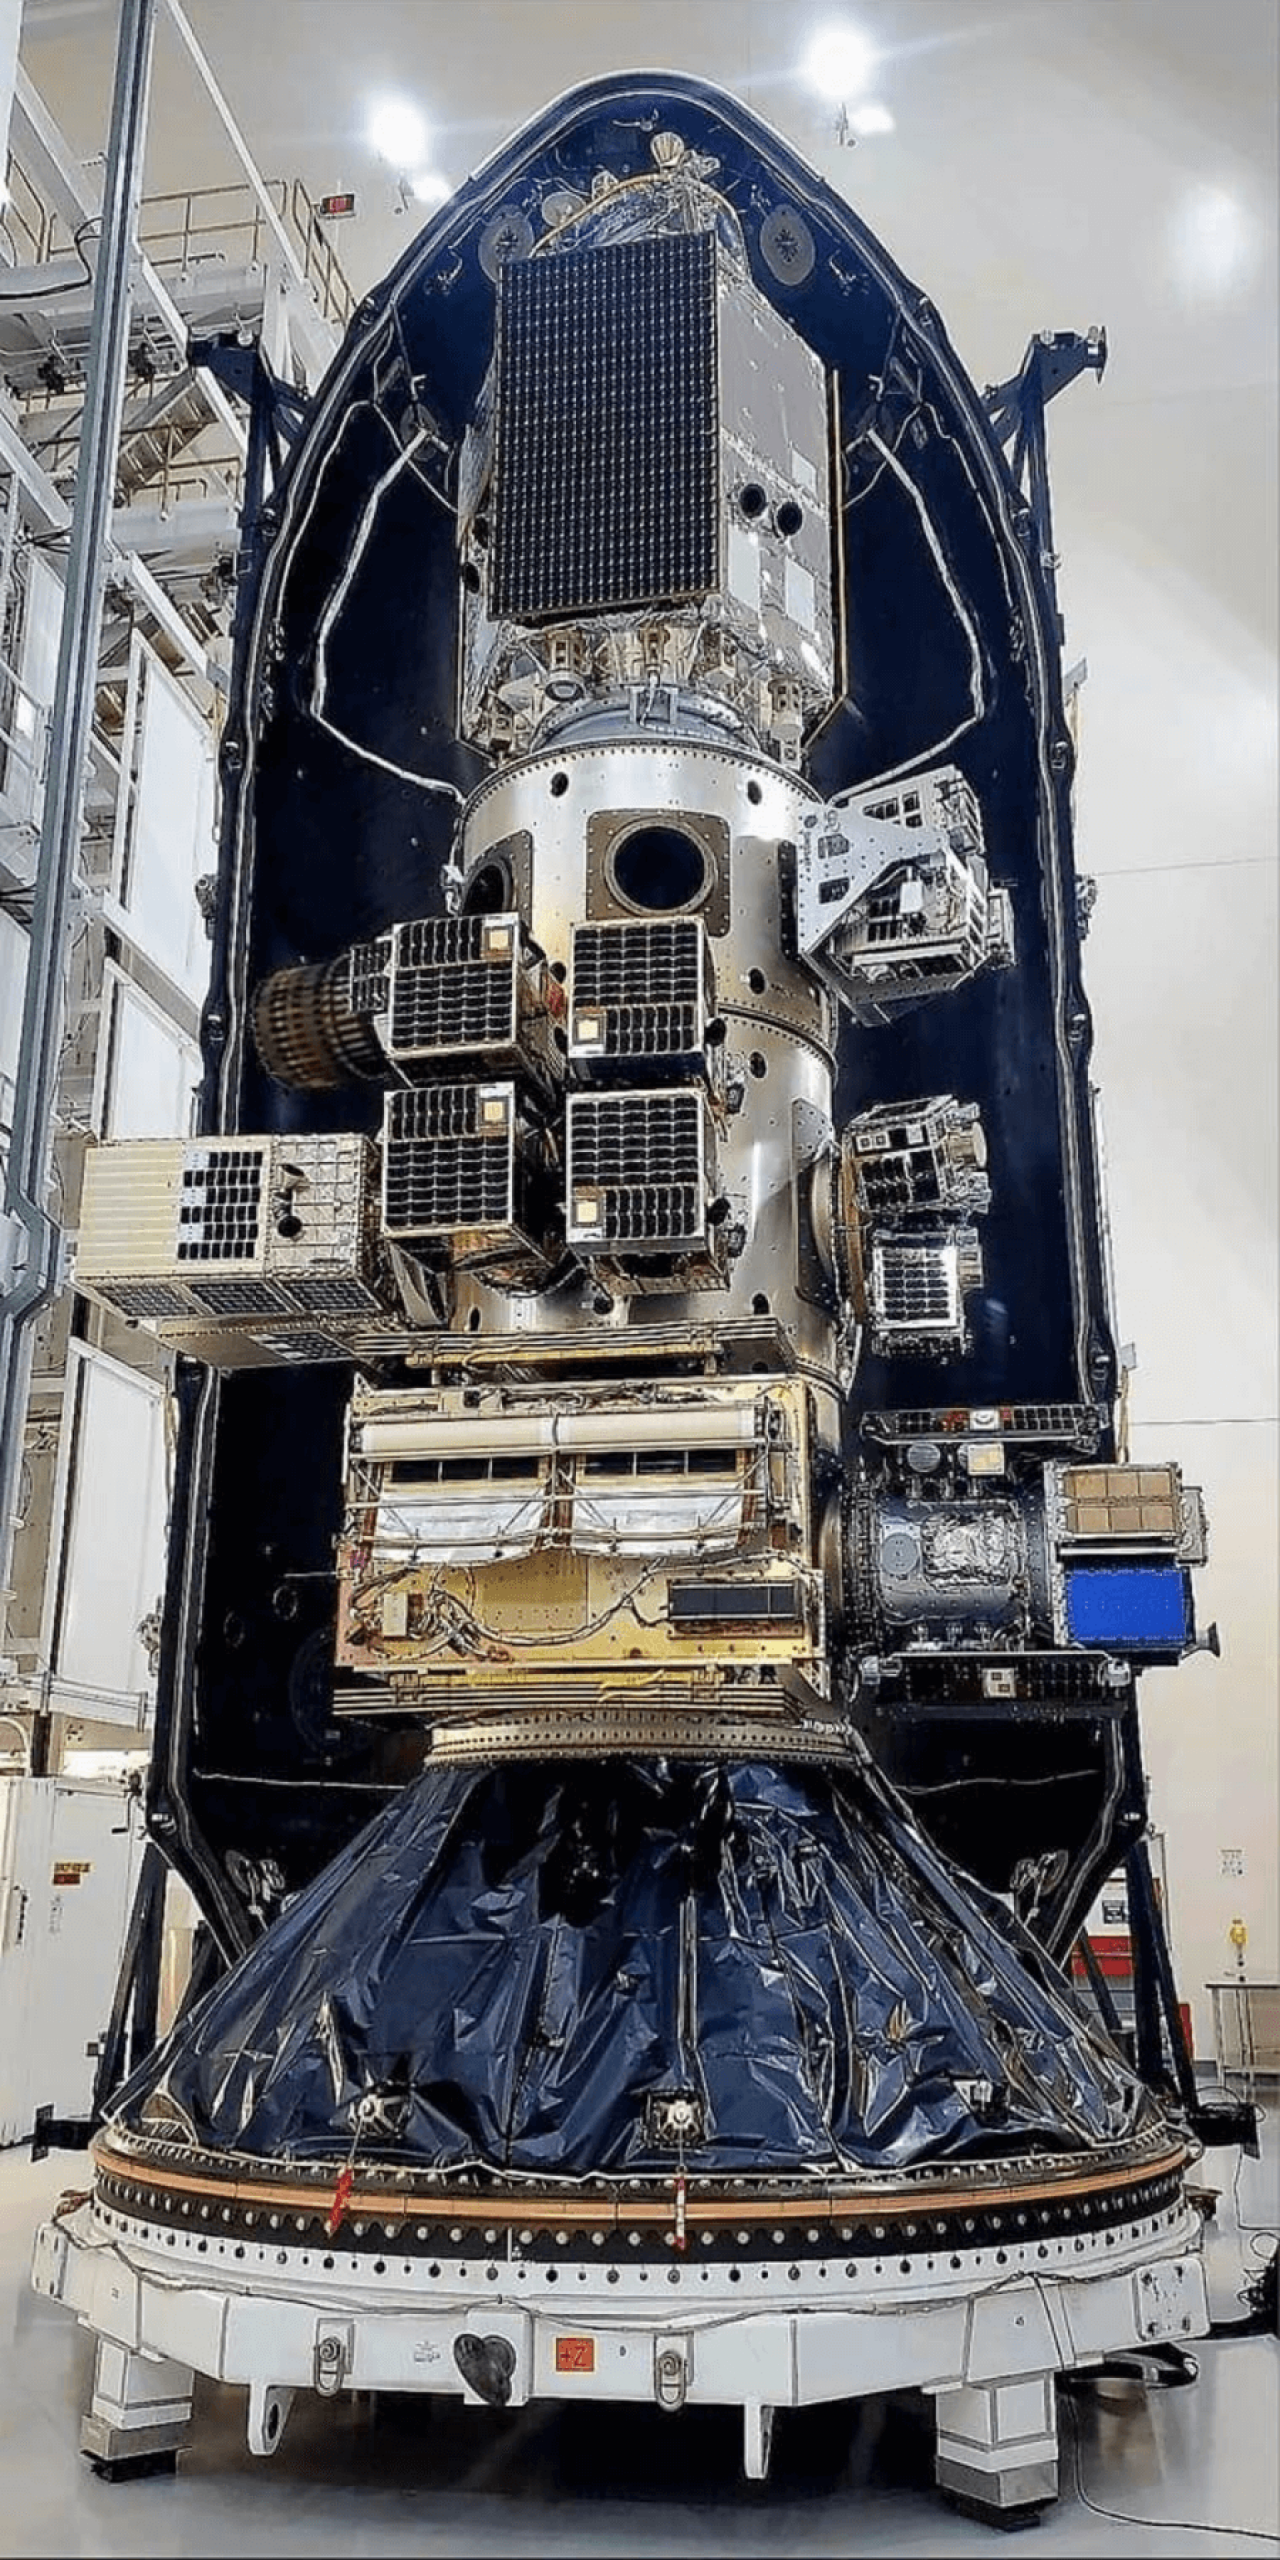 A GHOSt satellite awaits launch via a SpaceX rocket. Image: Orbital Sidekick